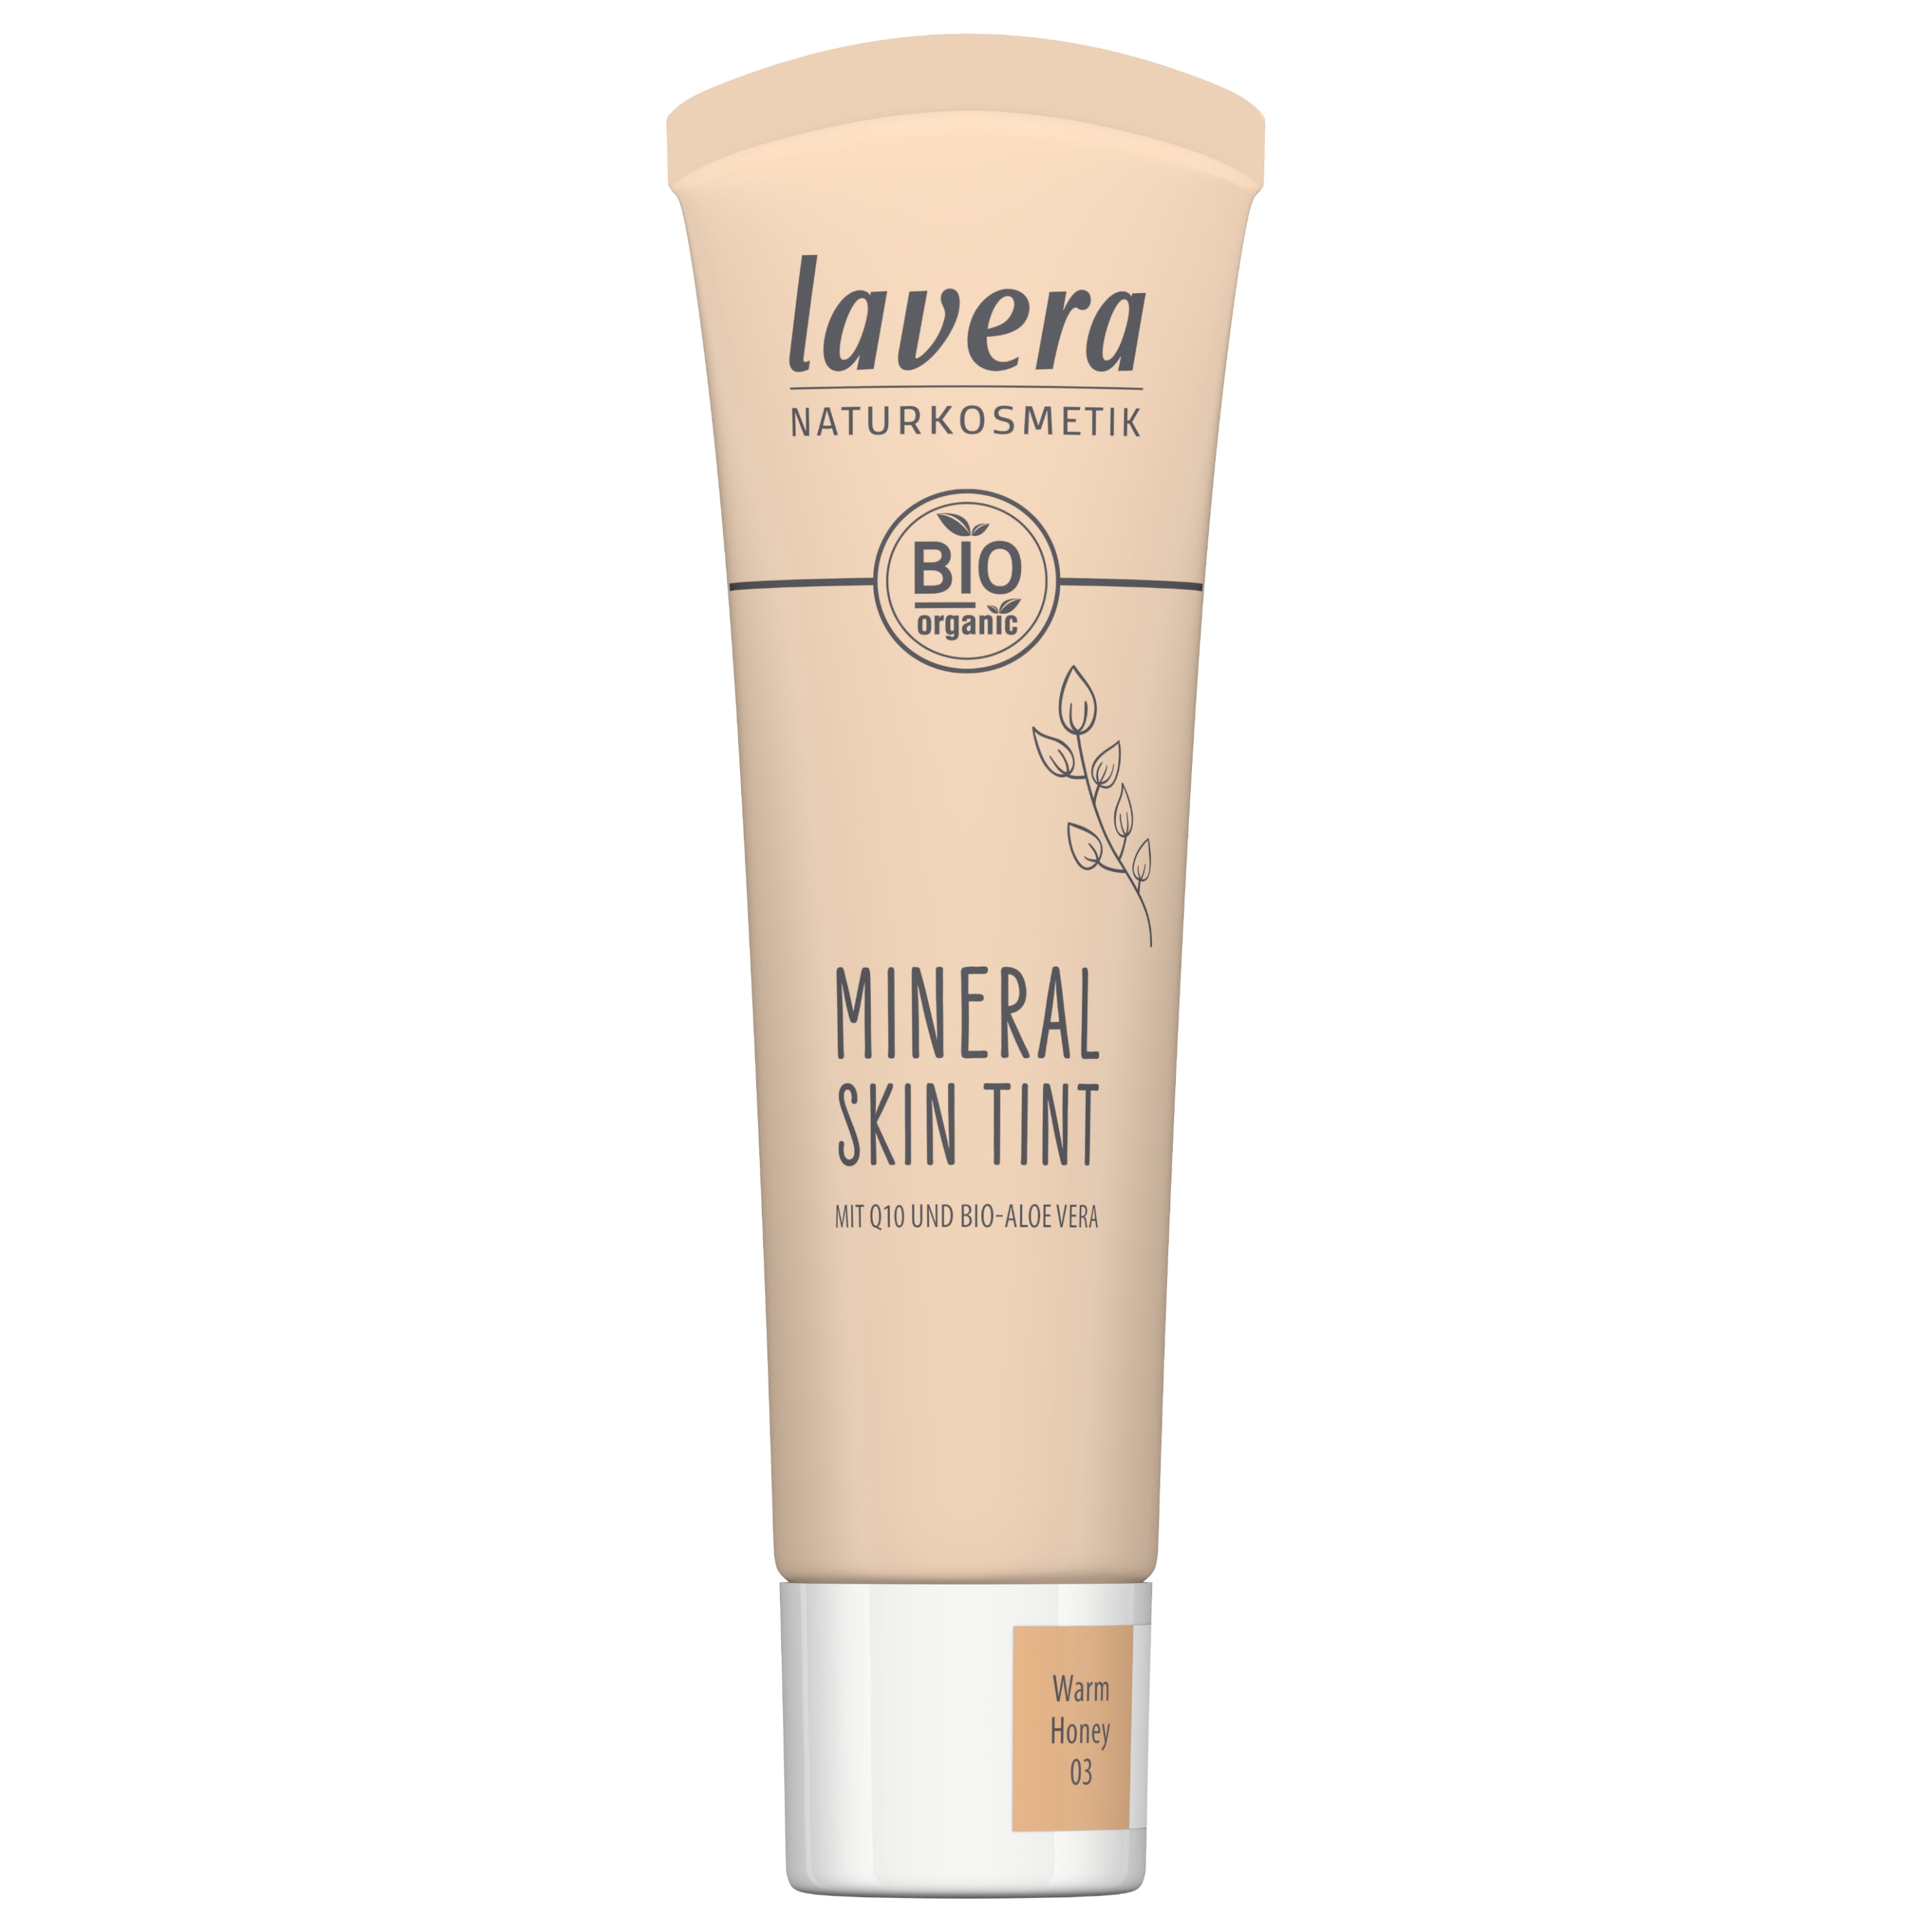 Lavera Mineral Skin Tint -Warm Honey 03